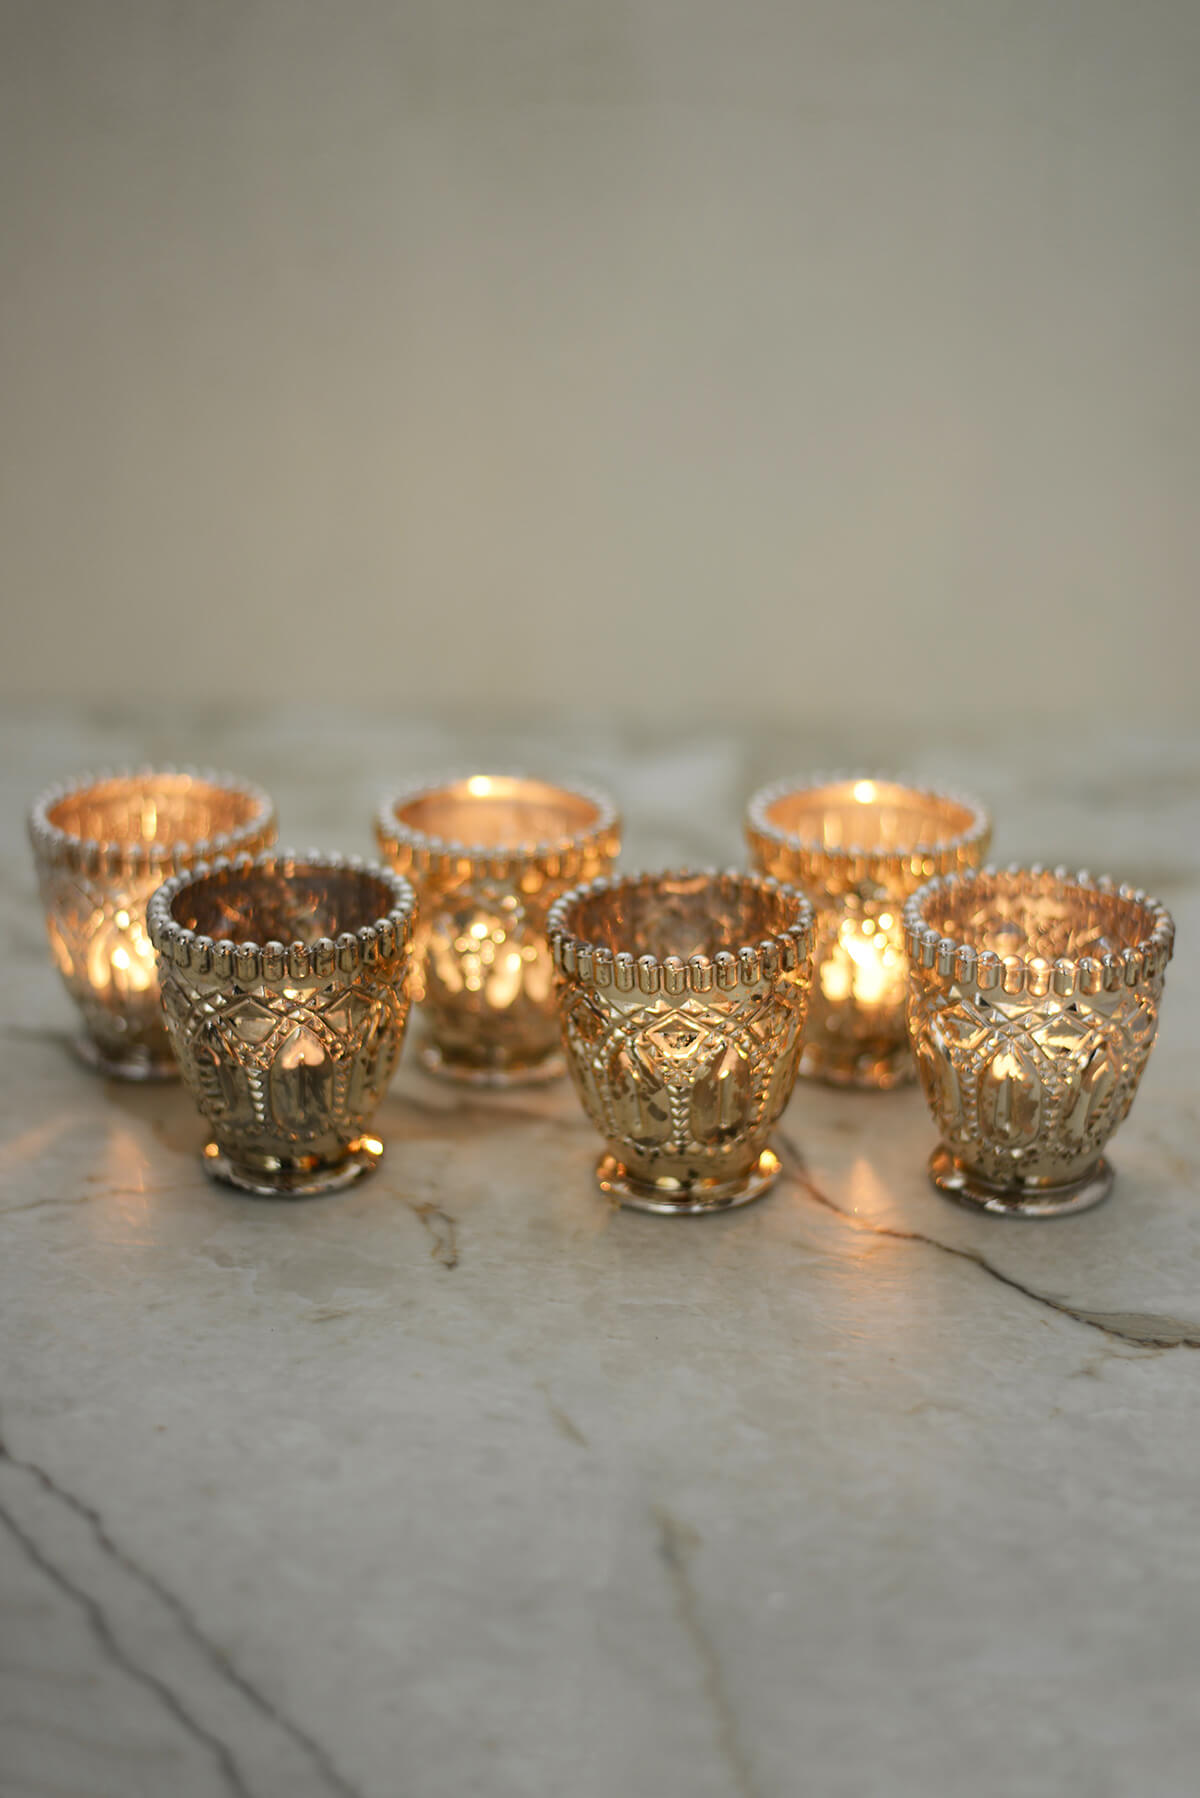 6 Mercury Glass Votive Candle Holders